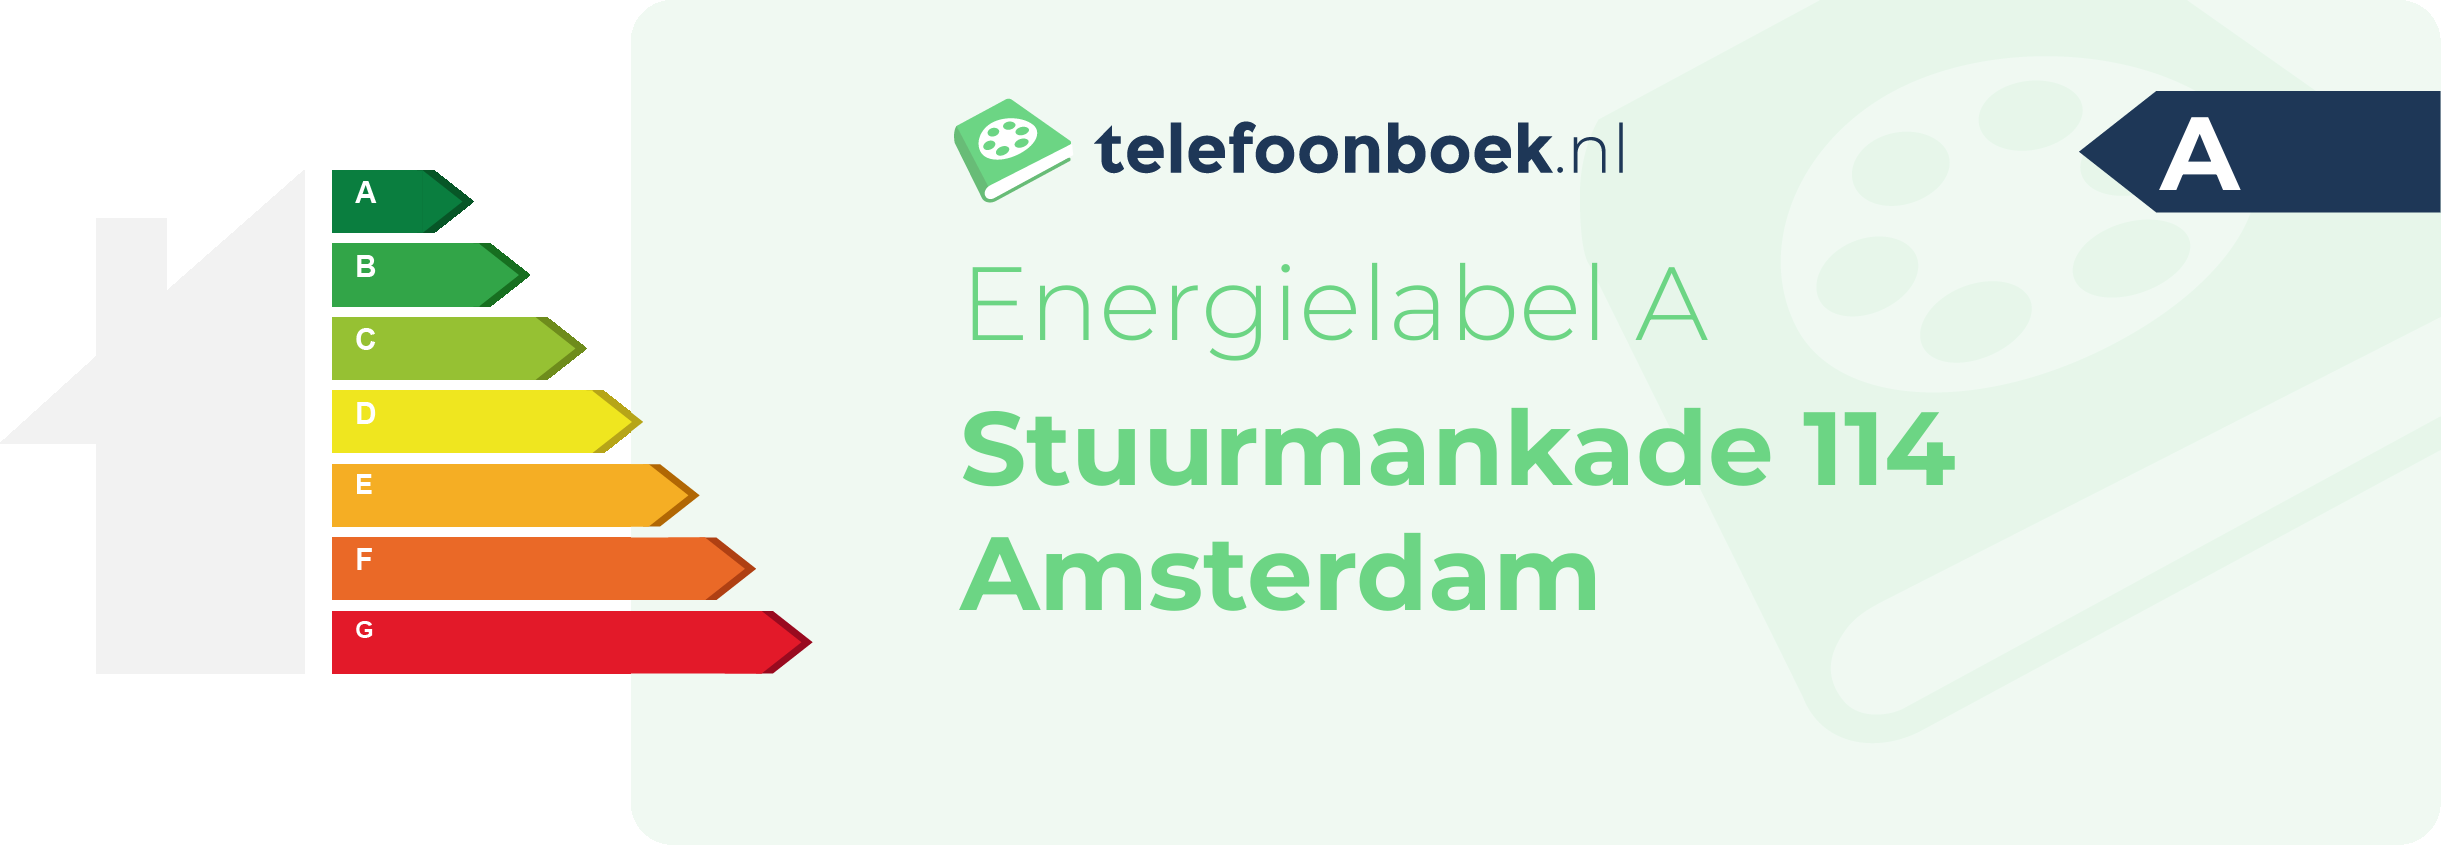 Energielabel Stuurmankade 114 Amsterdam